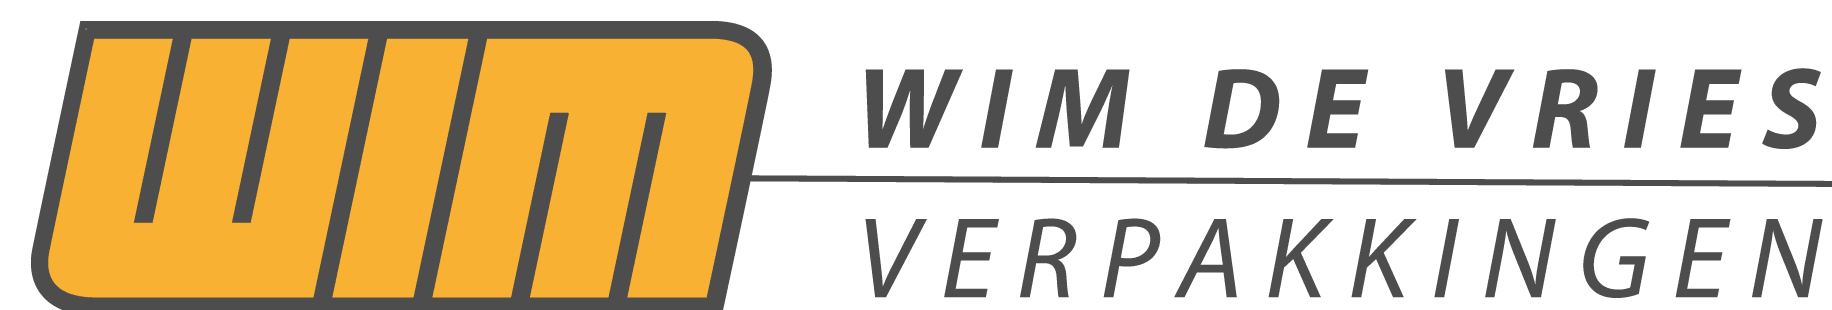 WDVV logo